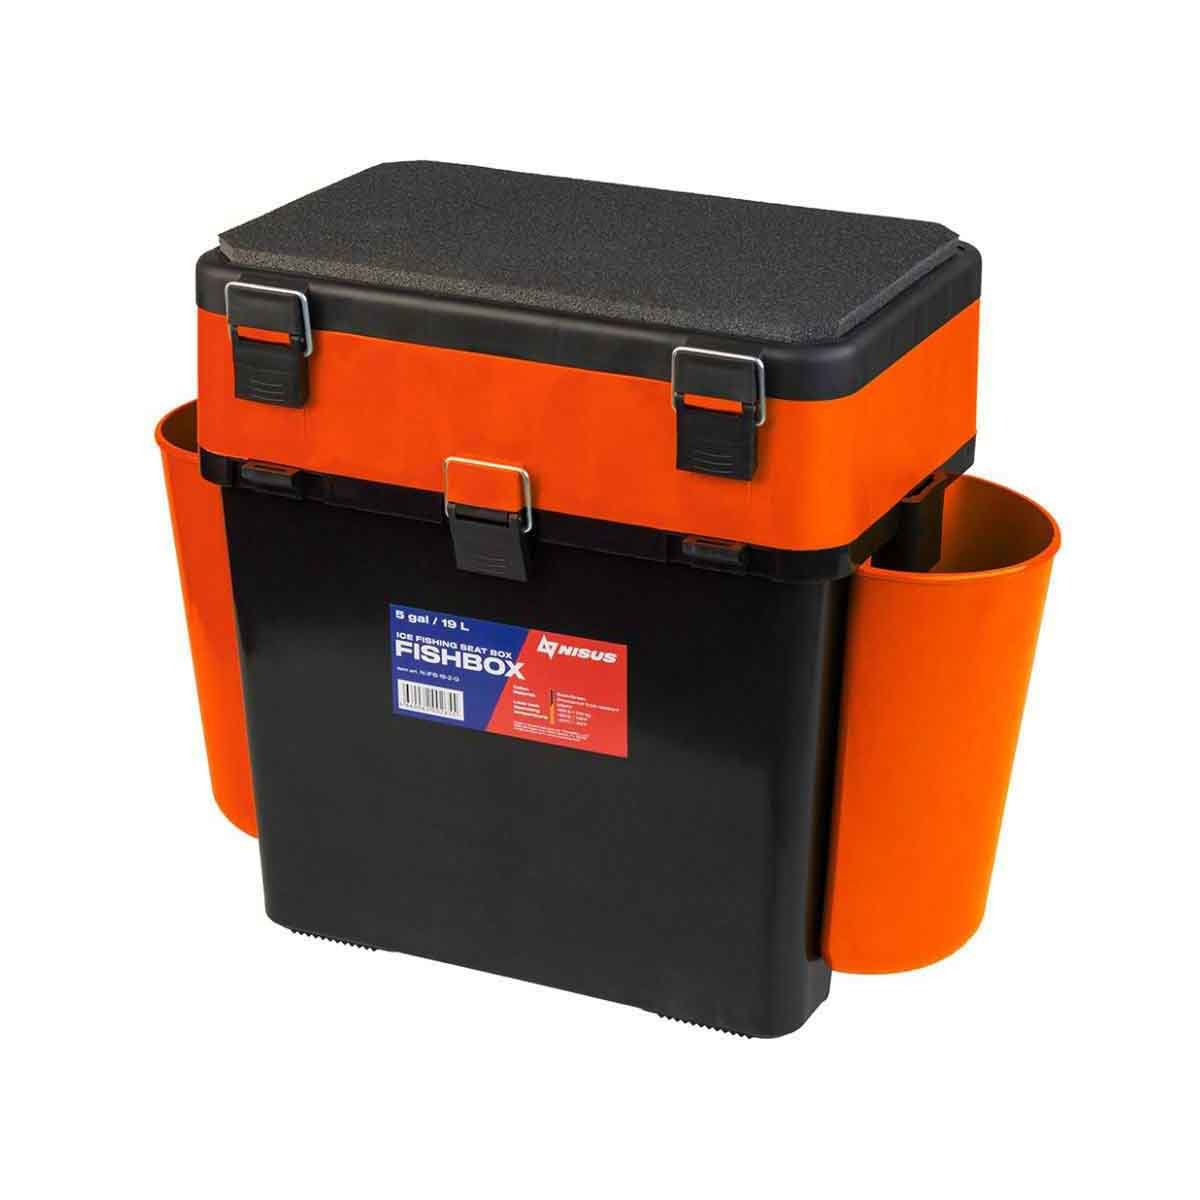 FishBox Large 5 gal Box for Ice Fishing, 2 Compartments, Orange